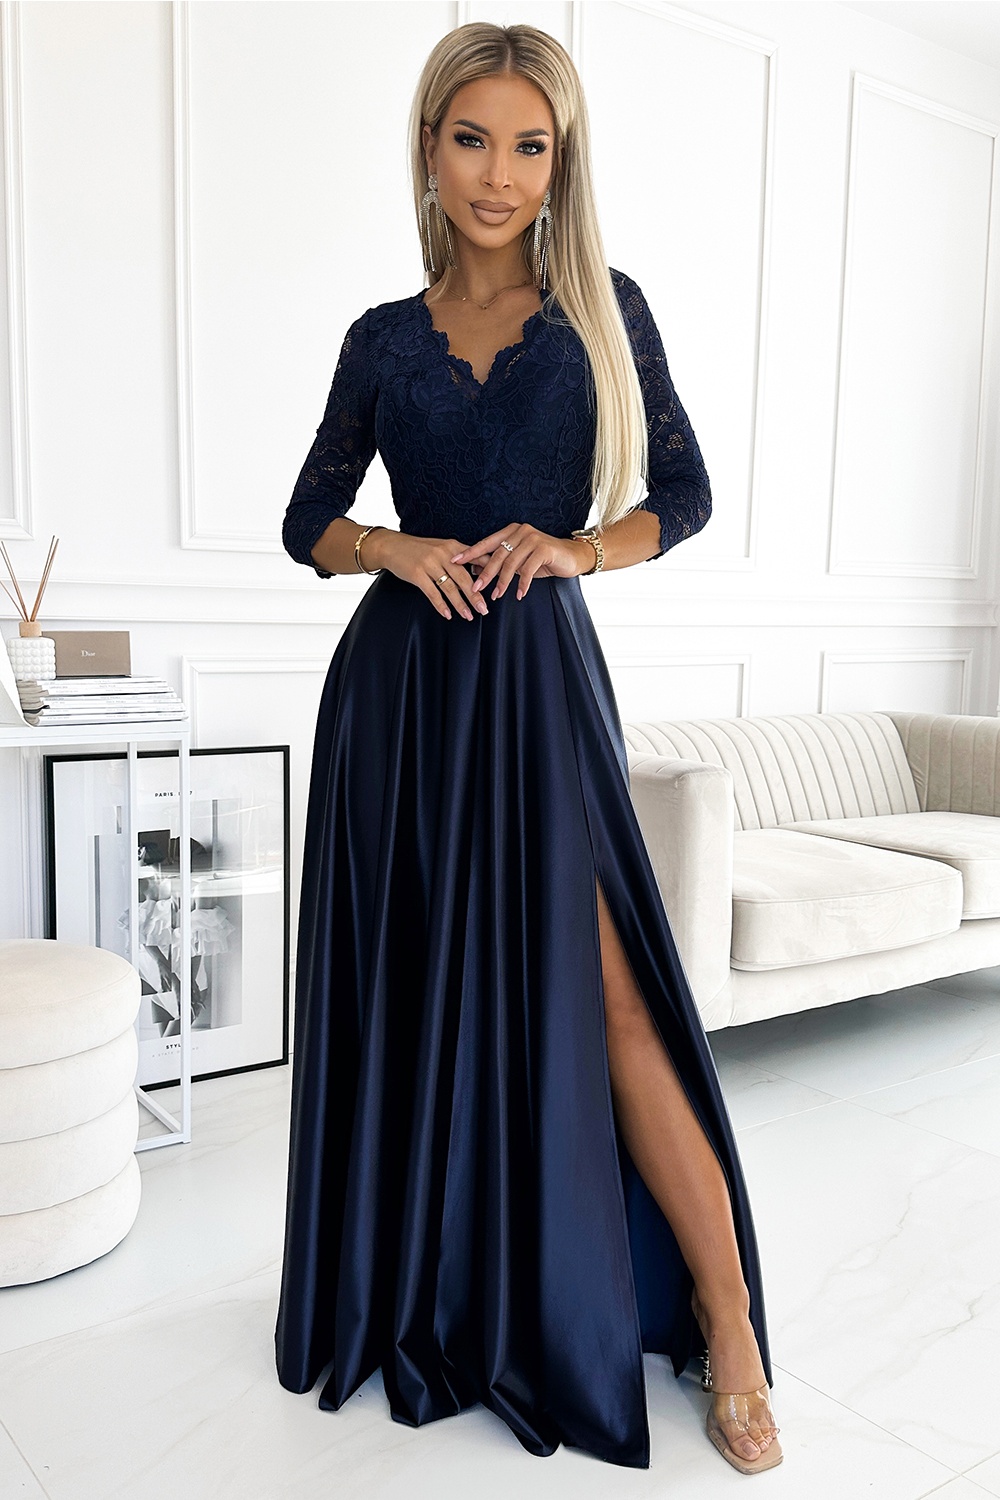  Dress Sukienka Model Amber 309-7 Navy Satyna - Numoco  navy blue